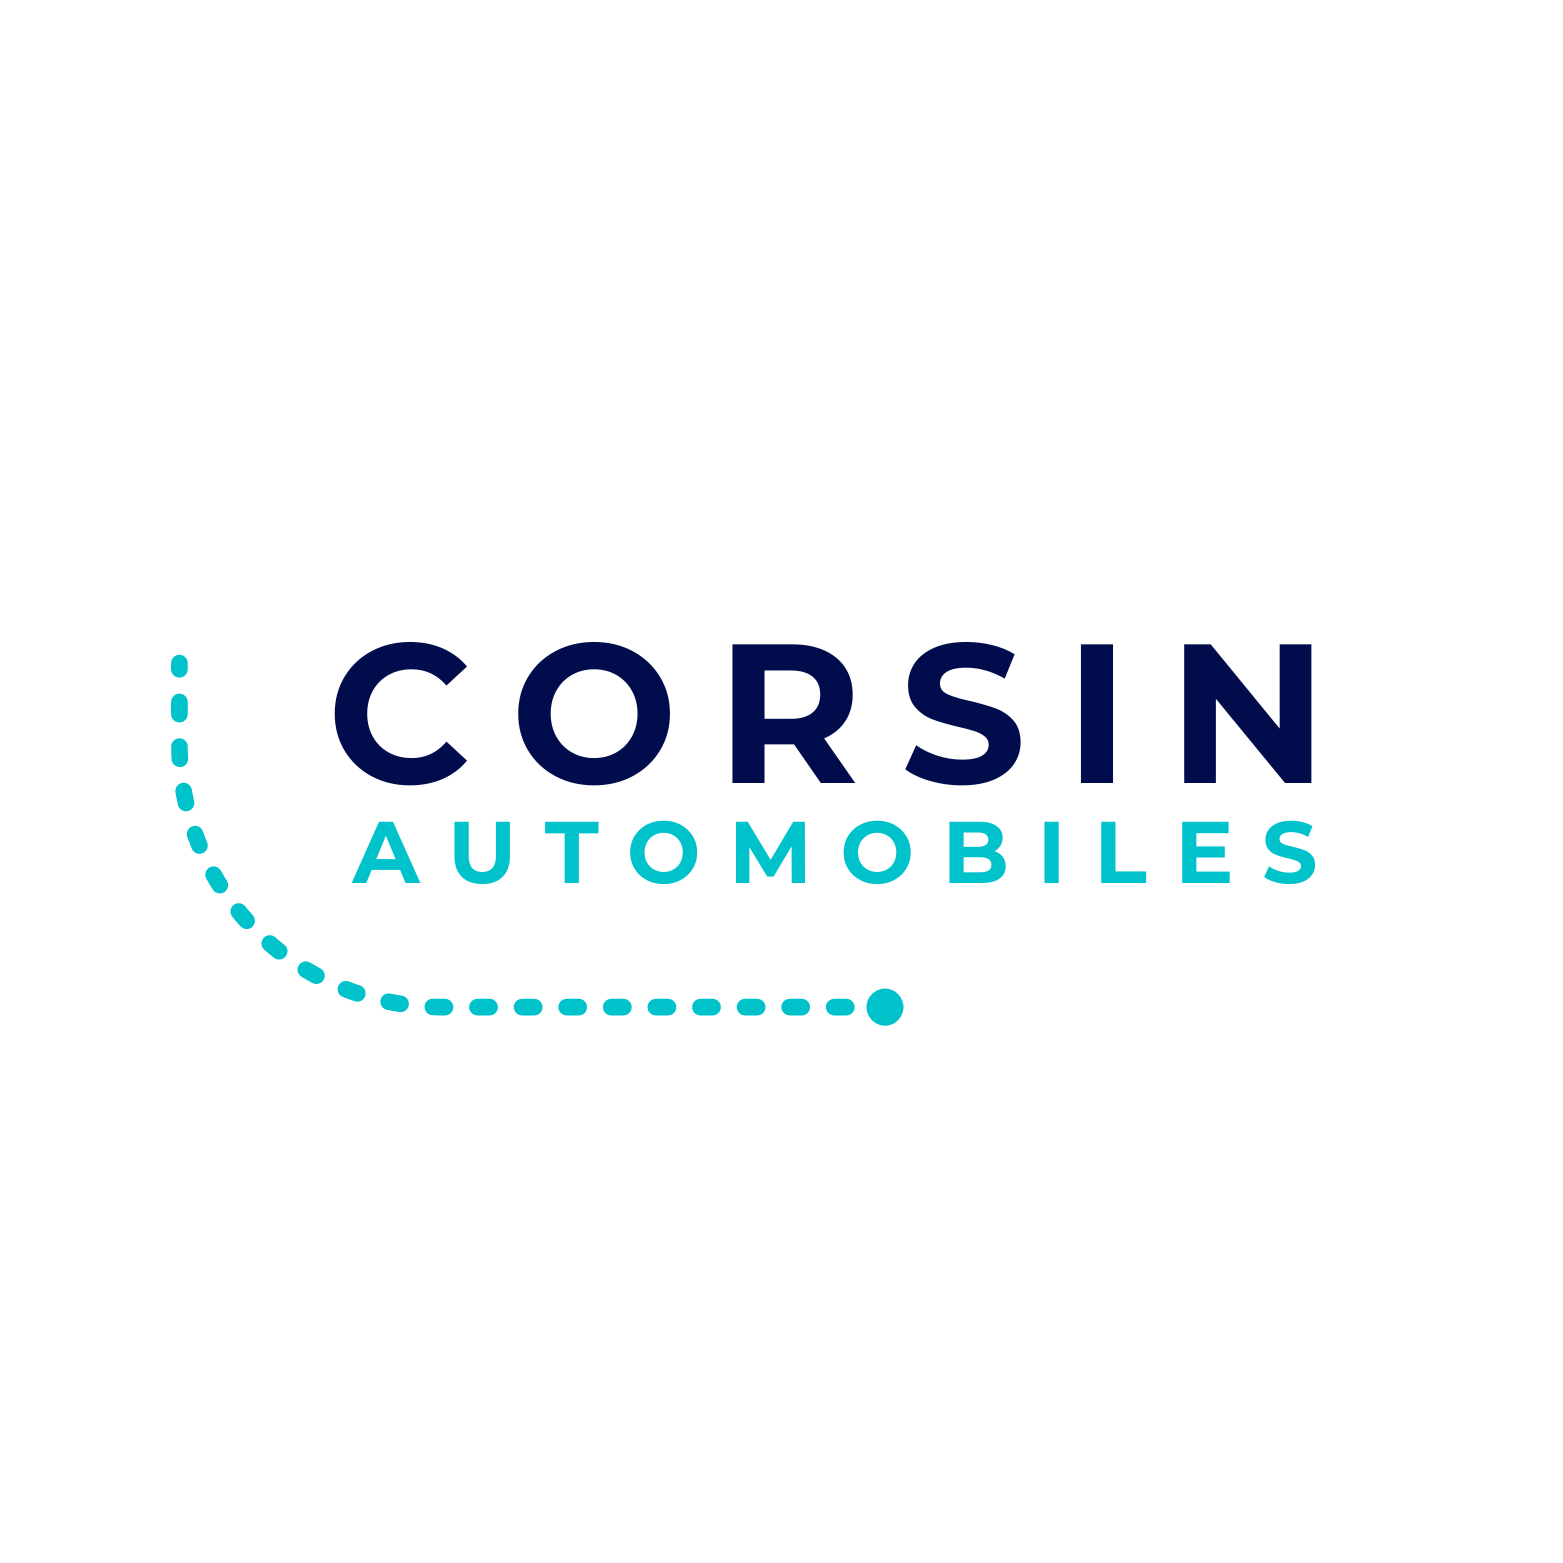 Corsin Automobiles